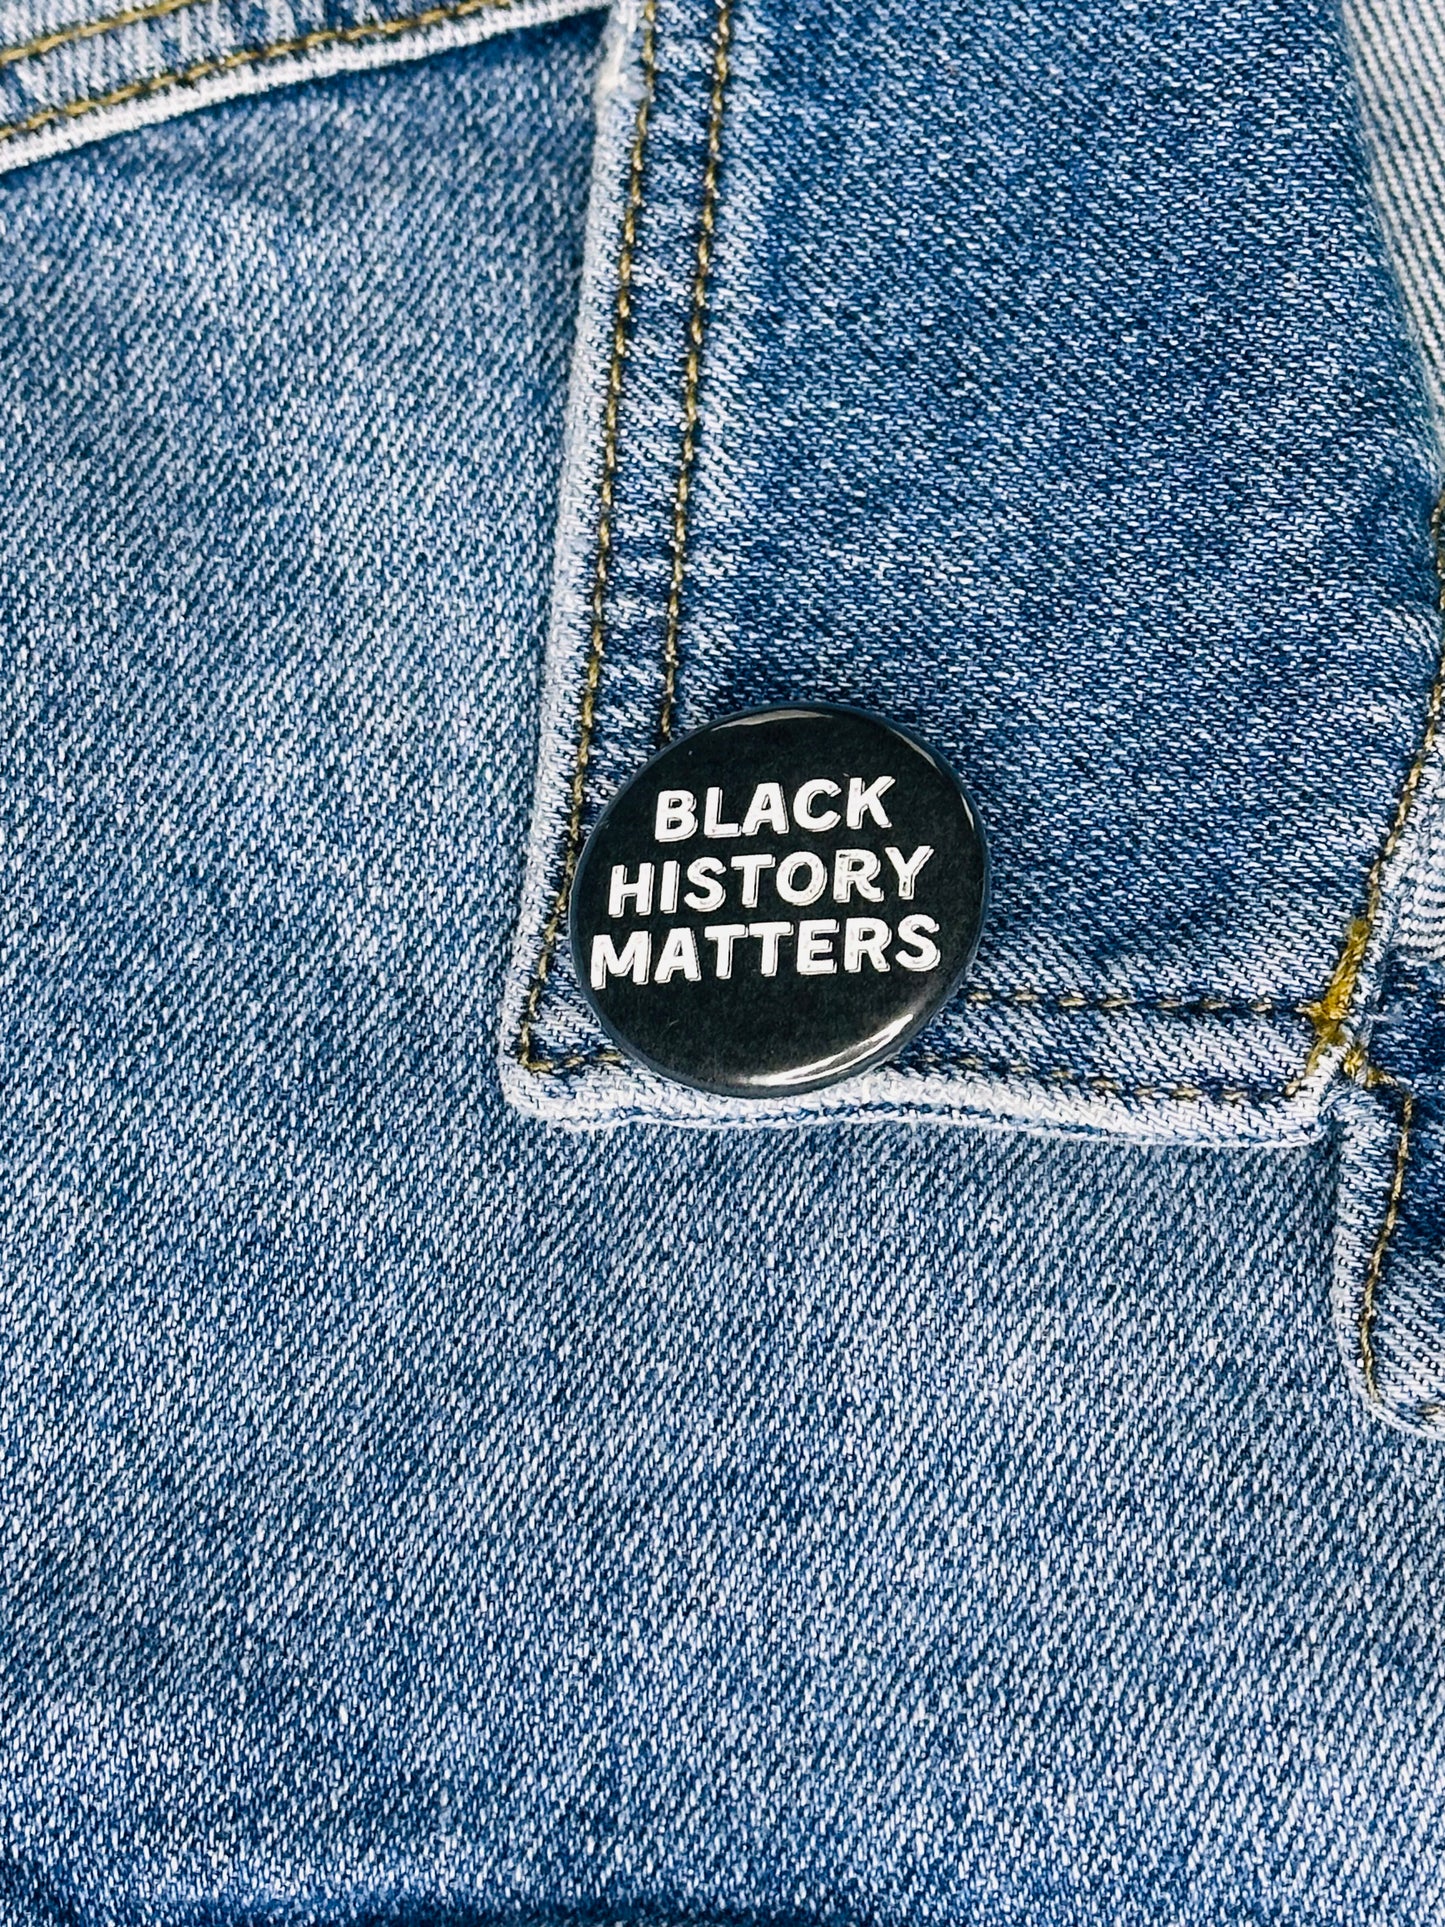 Black Fathers Black History Matters Pinback Button